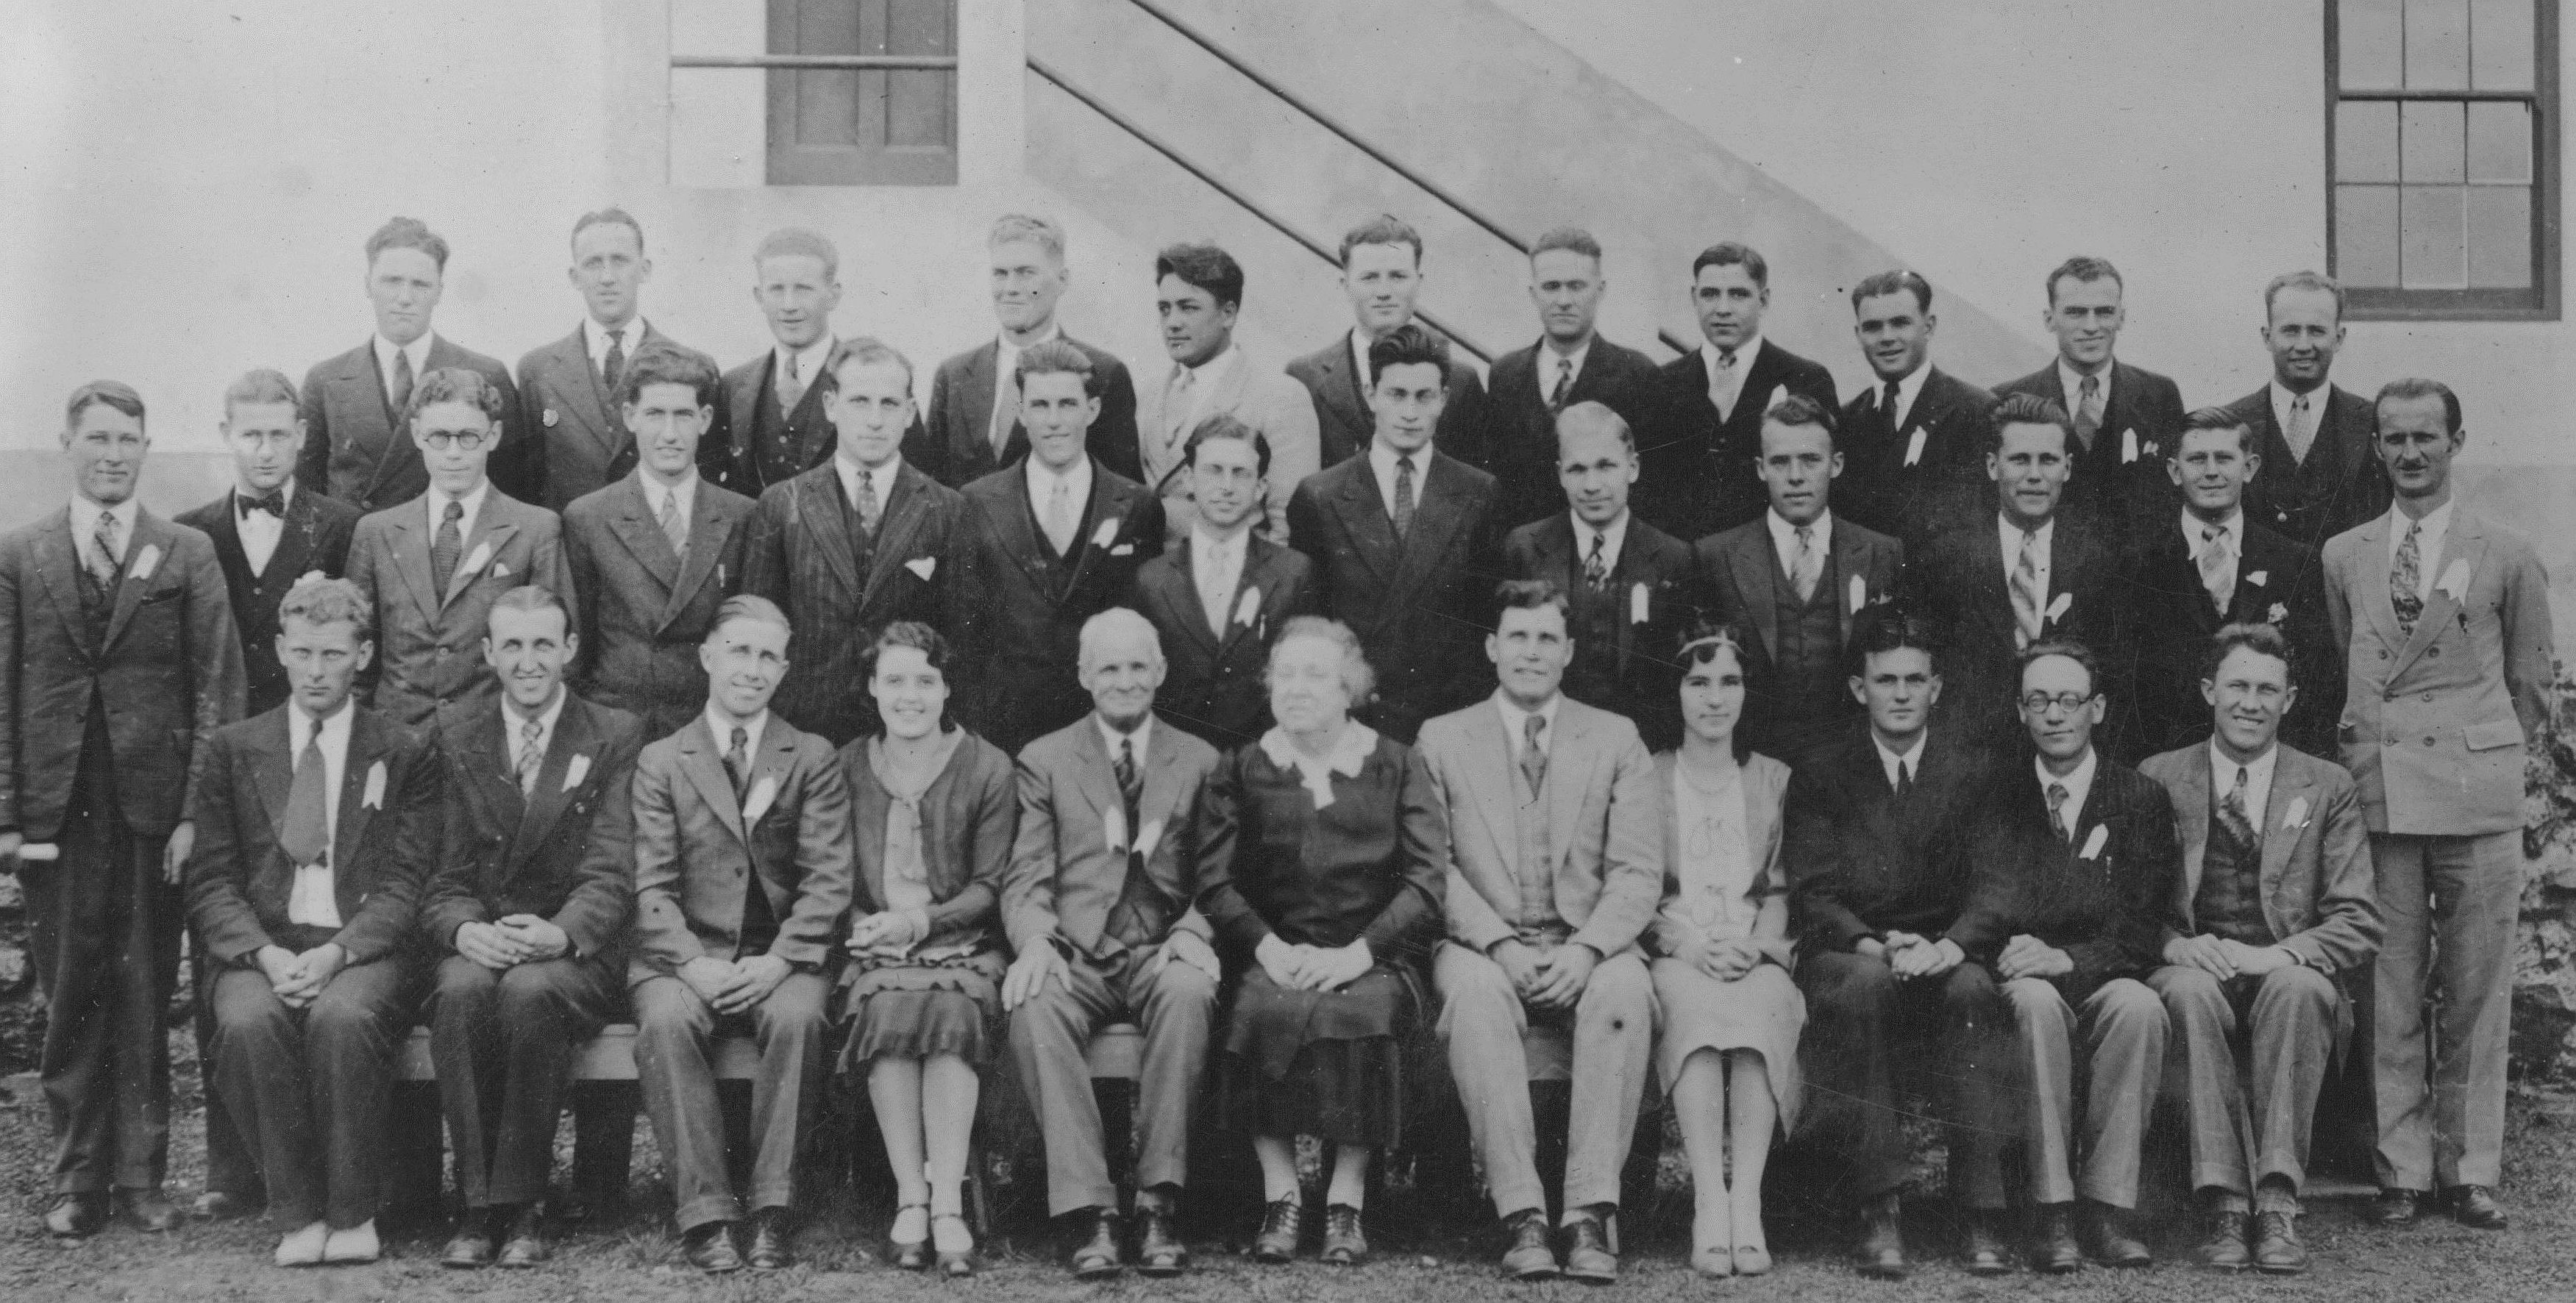 NZ Mission conference at Nuhaka, 4 April 1931.